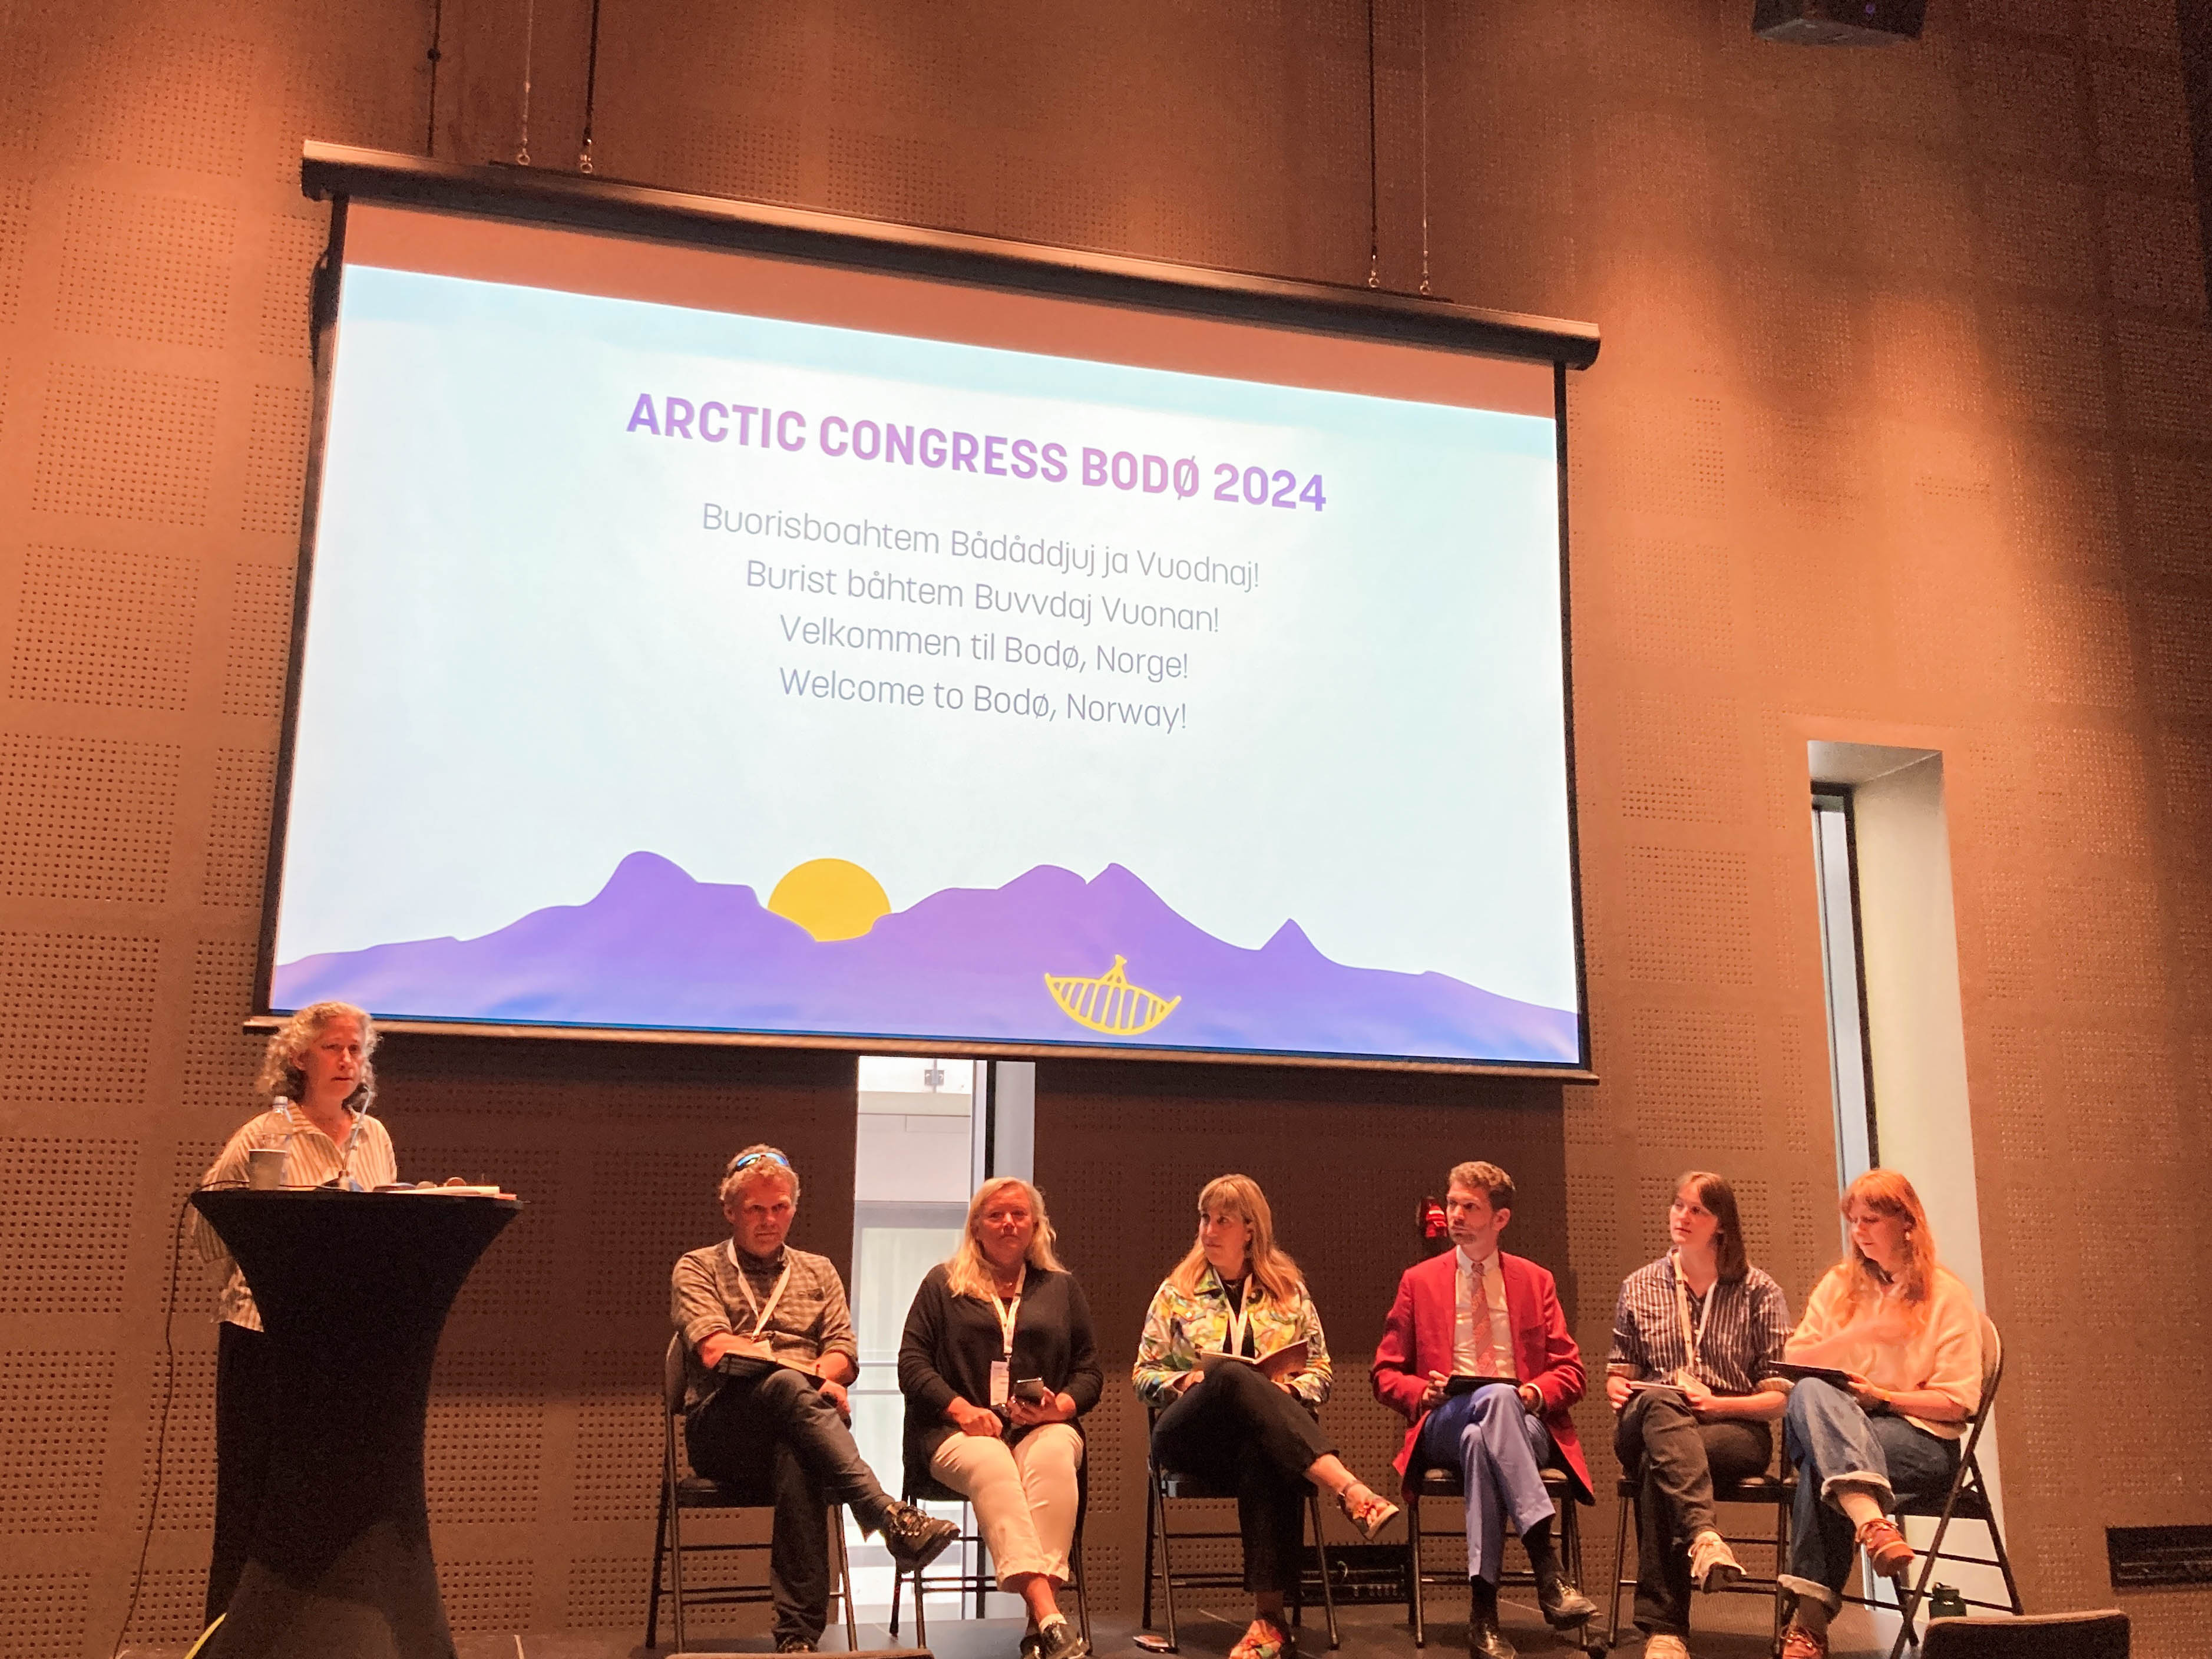 Panelists at the Arctic Congress Bodø 2024